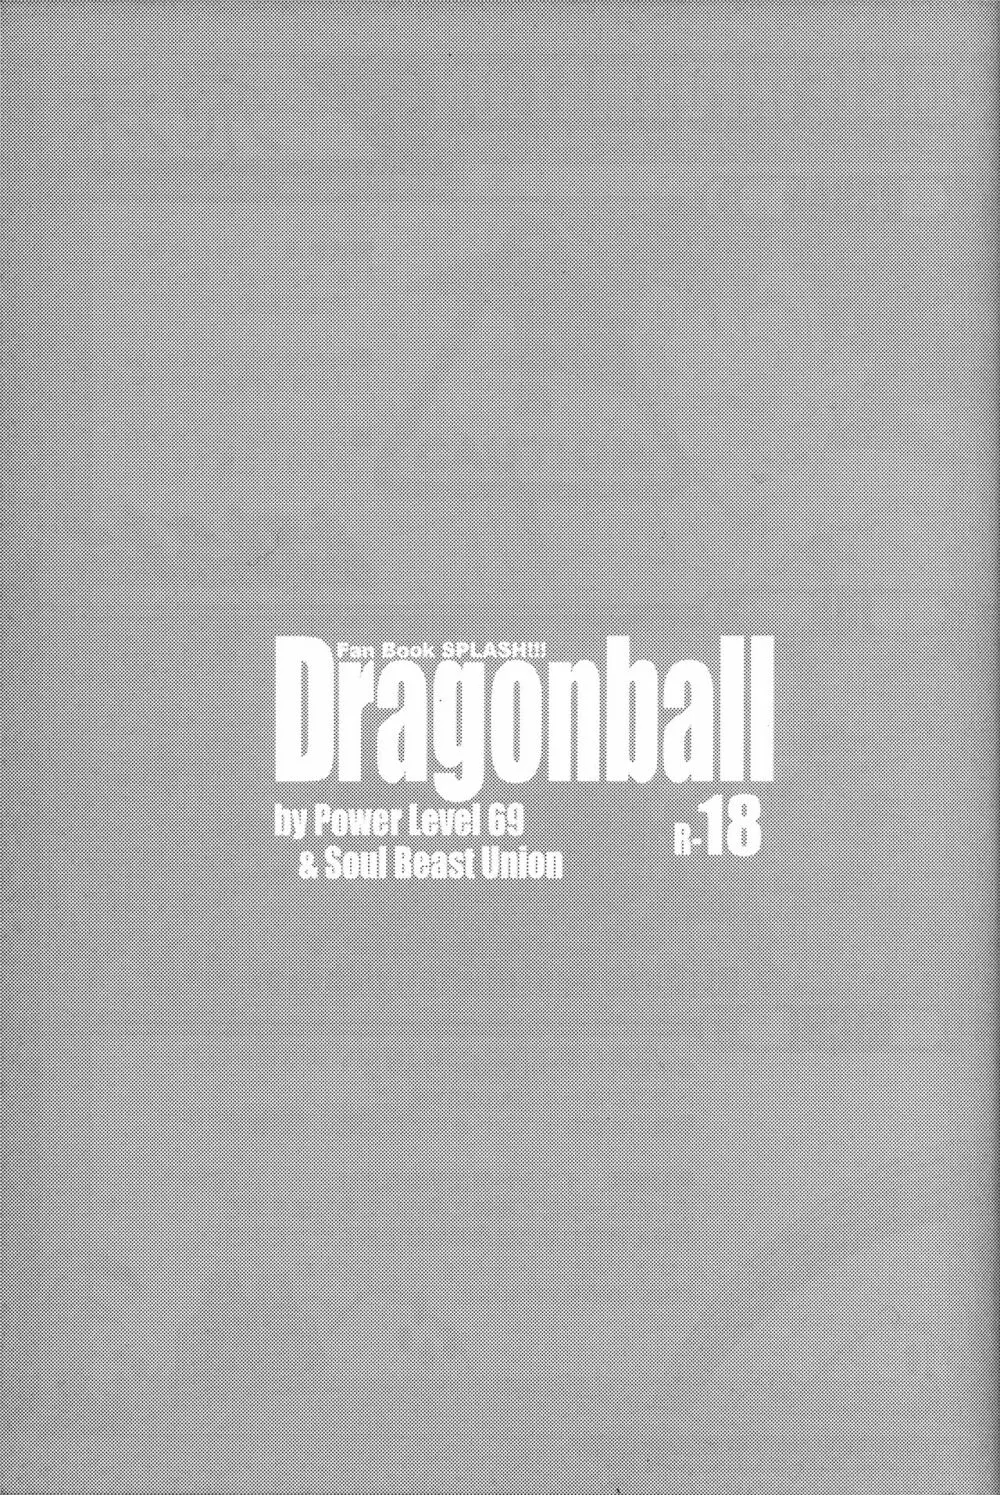 Dragonball Fan Book SPLASH!!! Page.4